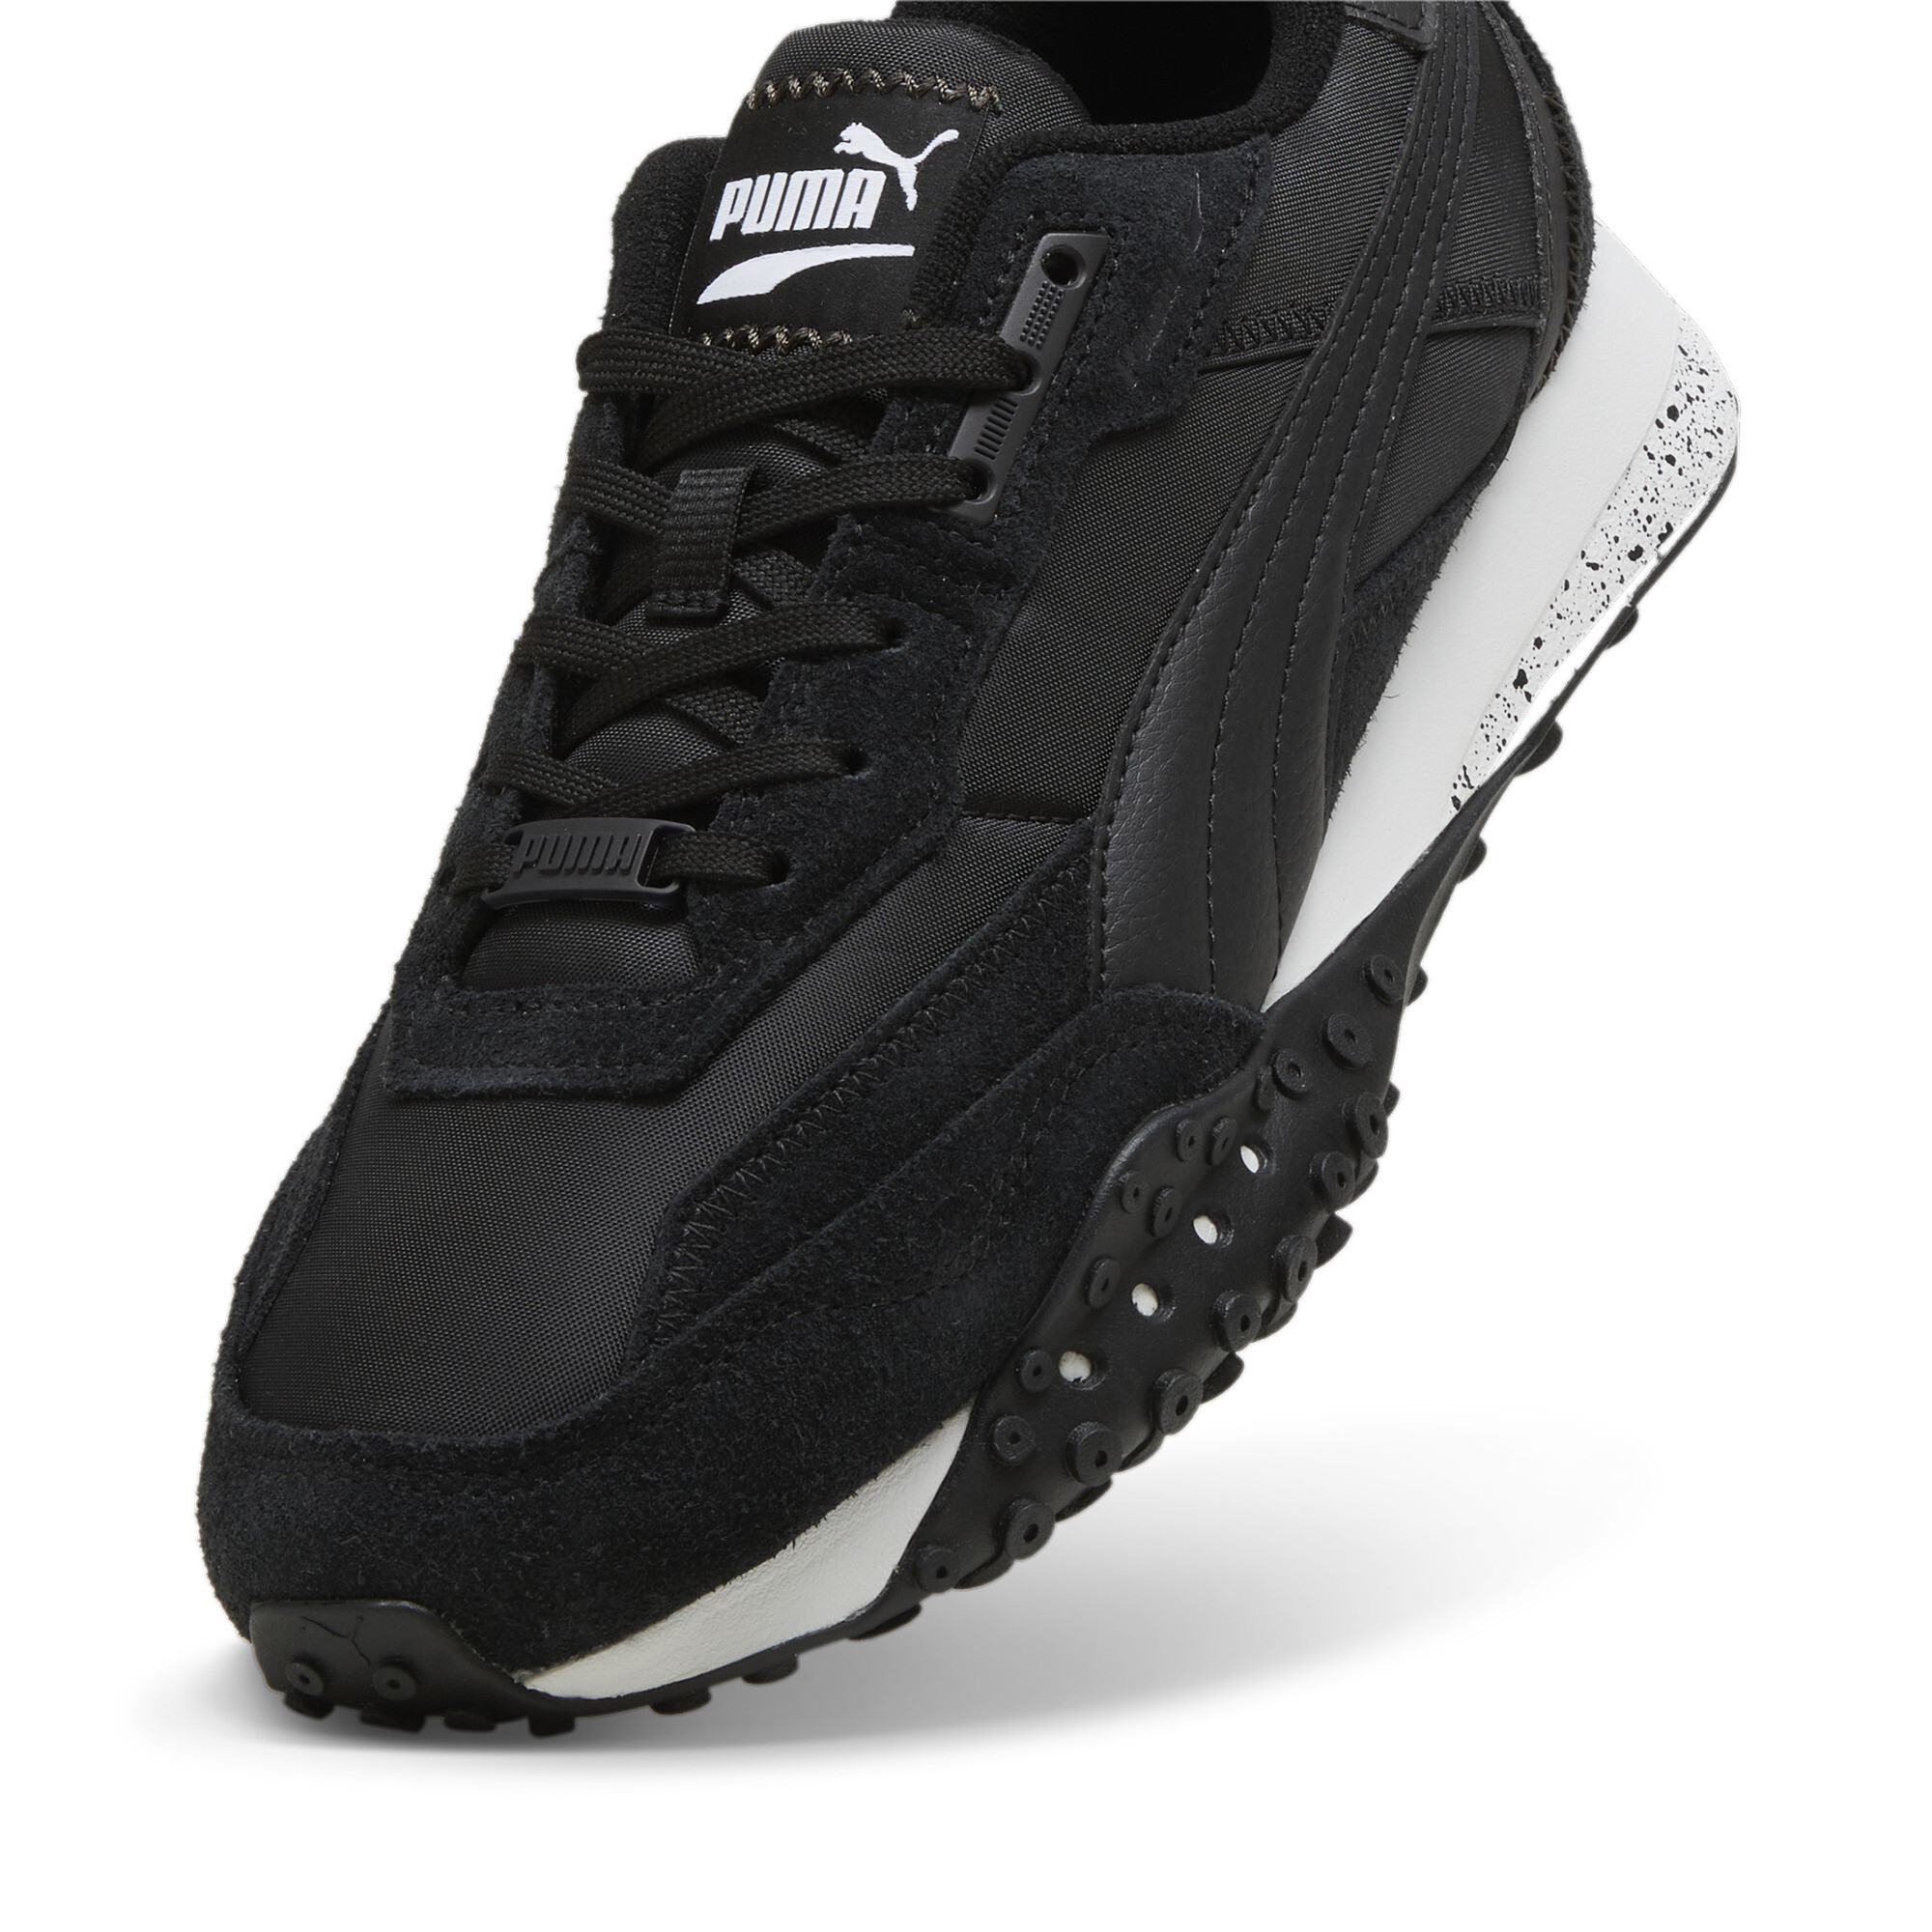 Men's PUMA Blktop Rider Sneakers In Black, Size EU 37.5